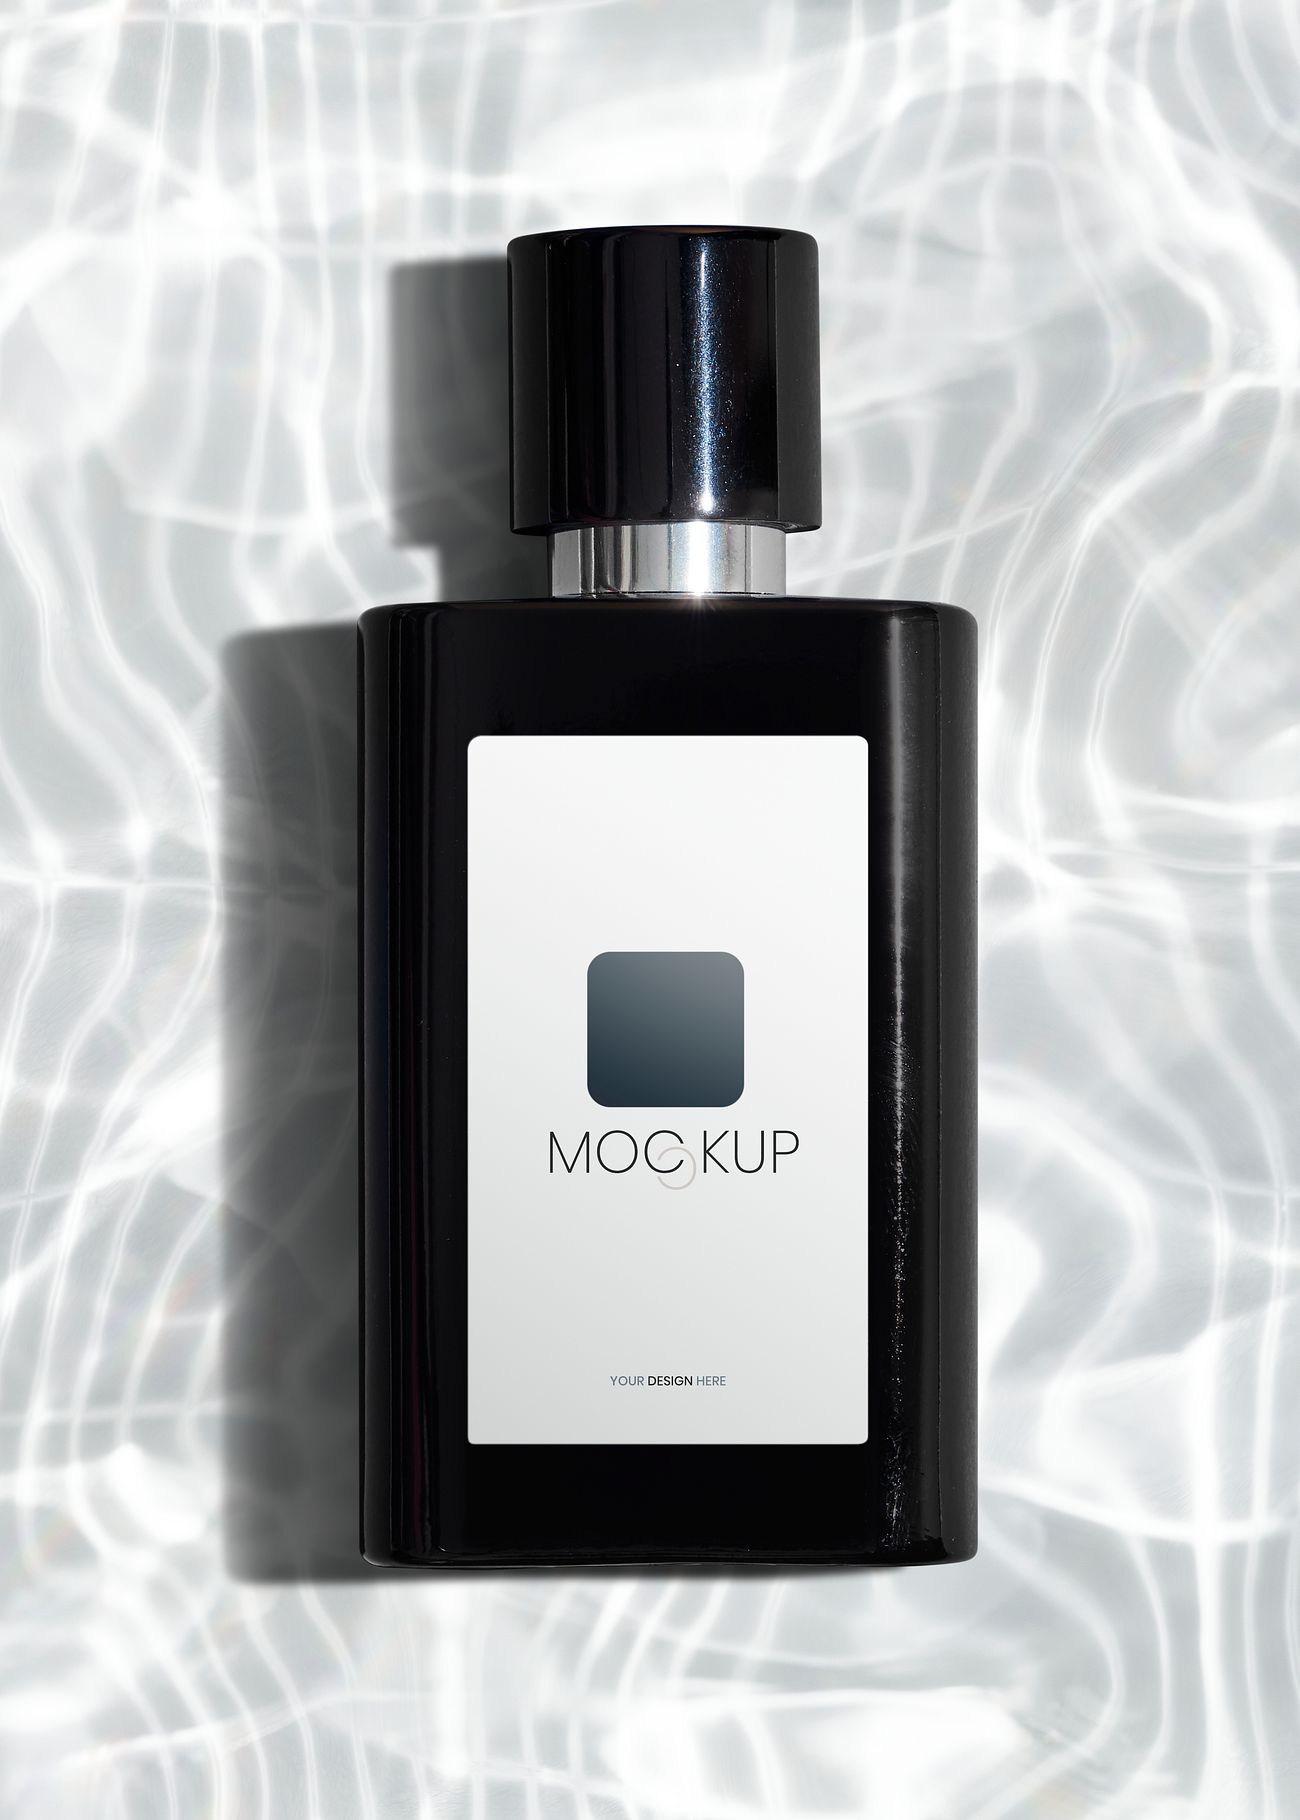 Download Black perfume glass bottle mockup design | Royalty free ...